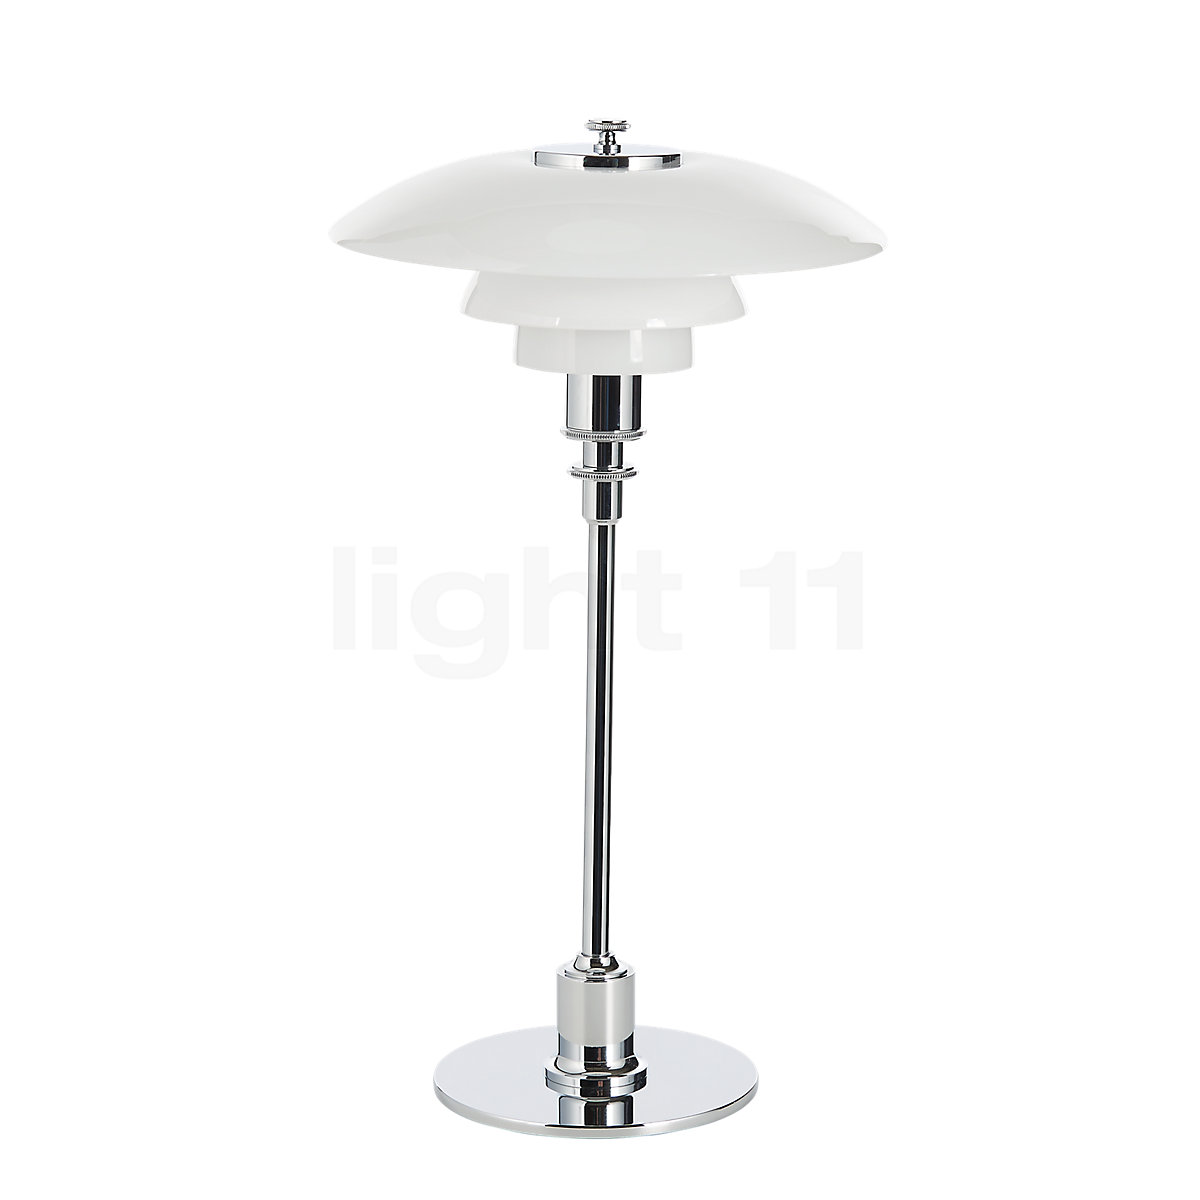 Louis Poulsen PH 2/1 Table Lamp by Poul Henningsen